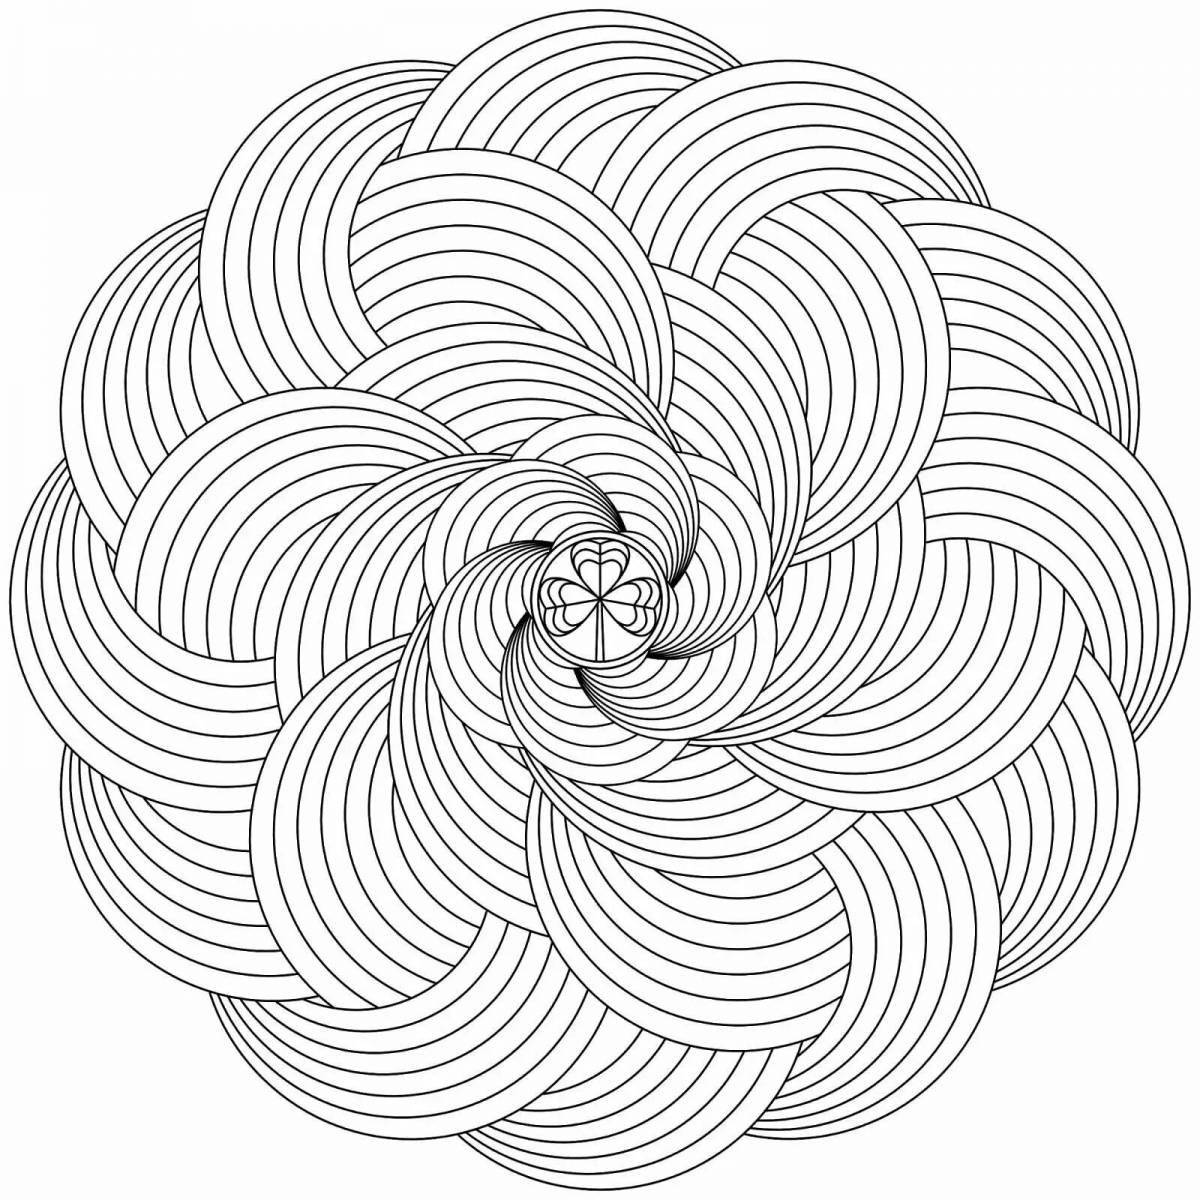 Artistic circular pattern spiral coloring